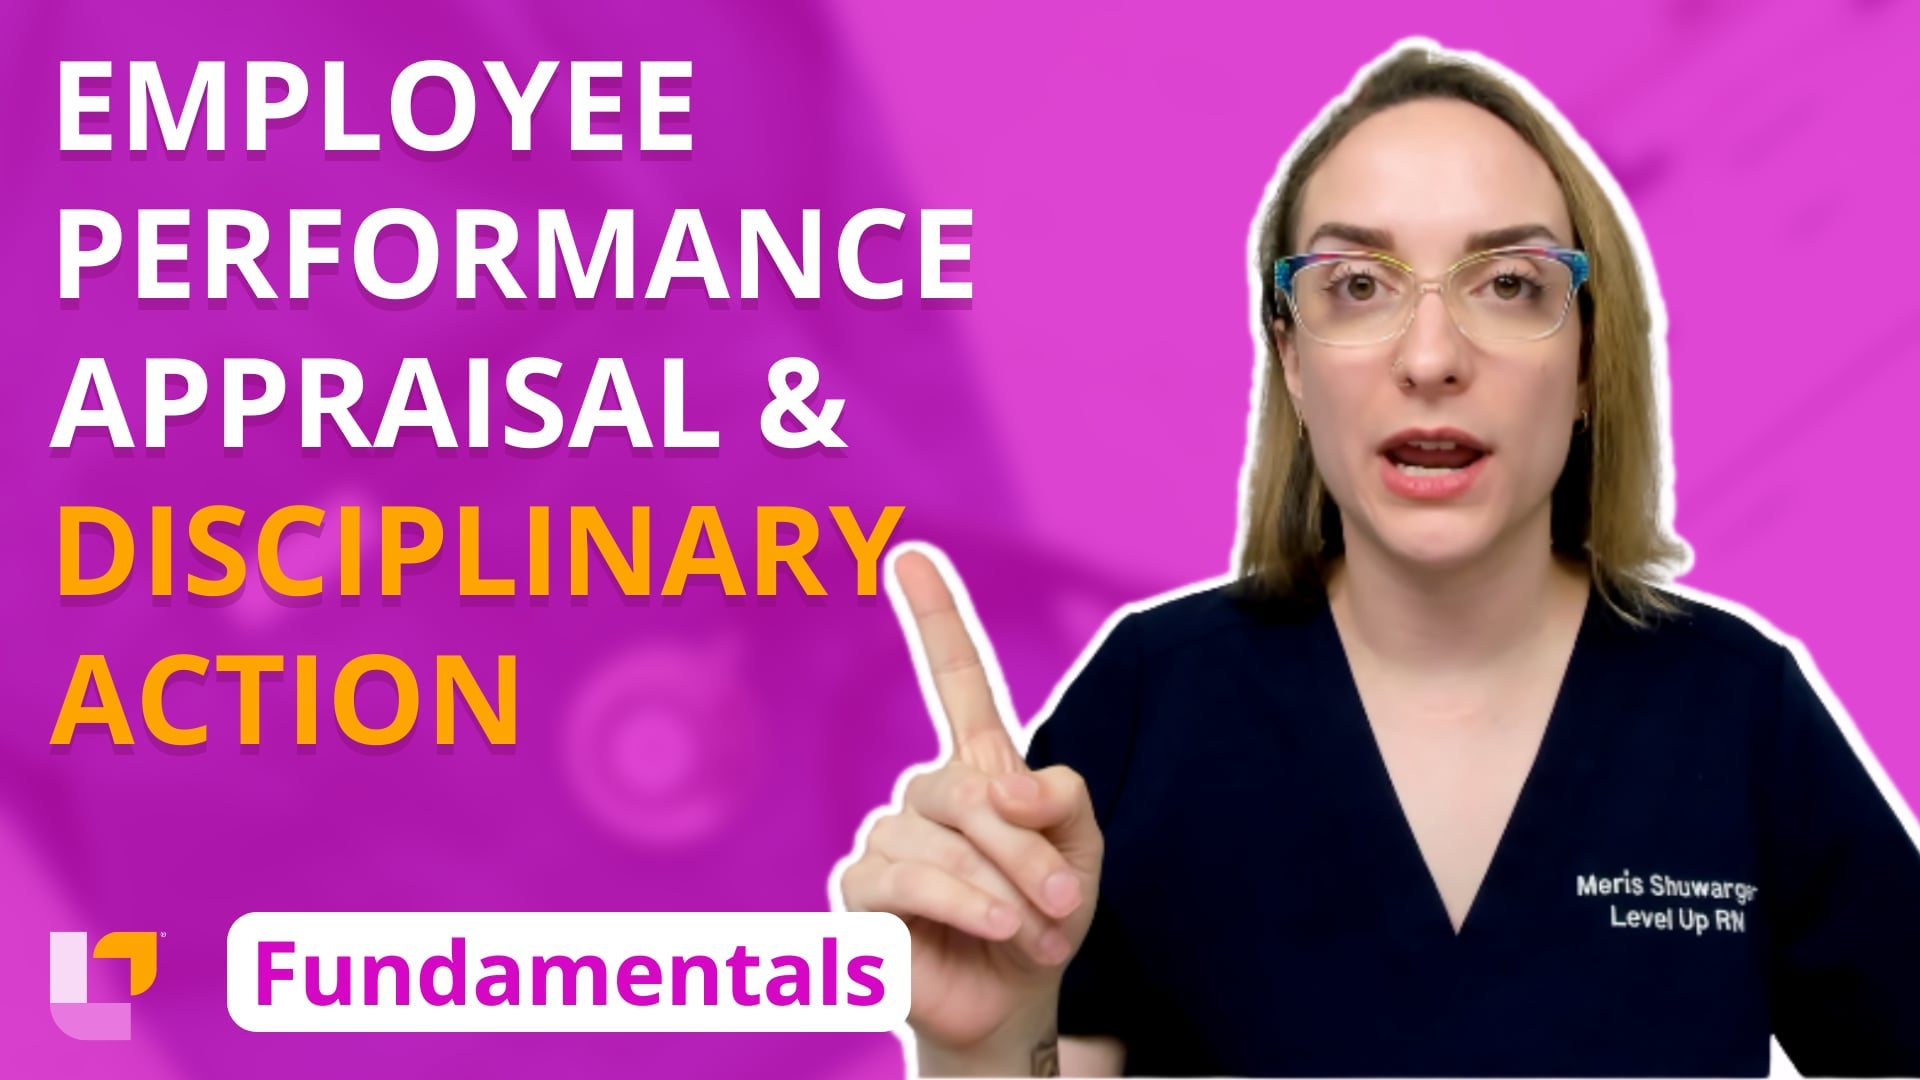 Fundamentals - Leadership, part 6: Employee Performance Appraisal, Disciplinary Action - LevelUpRN